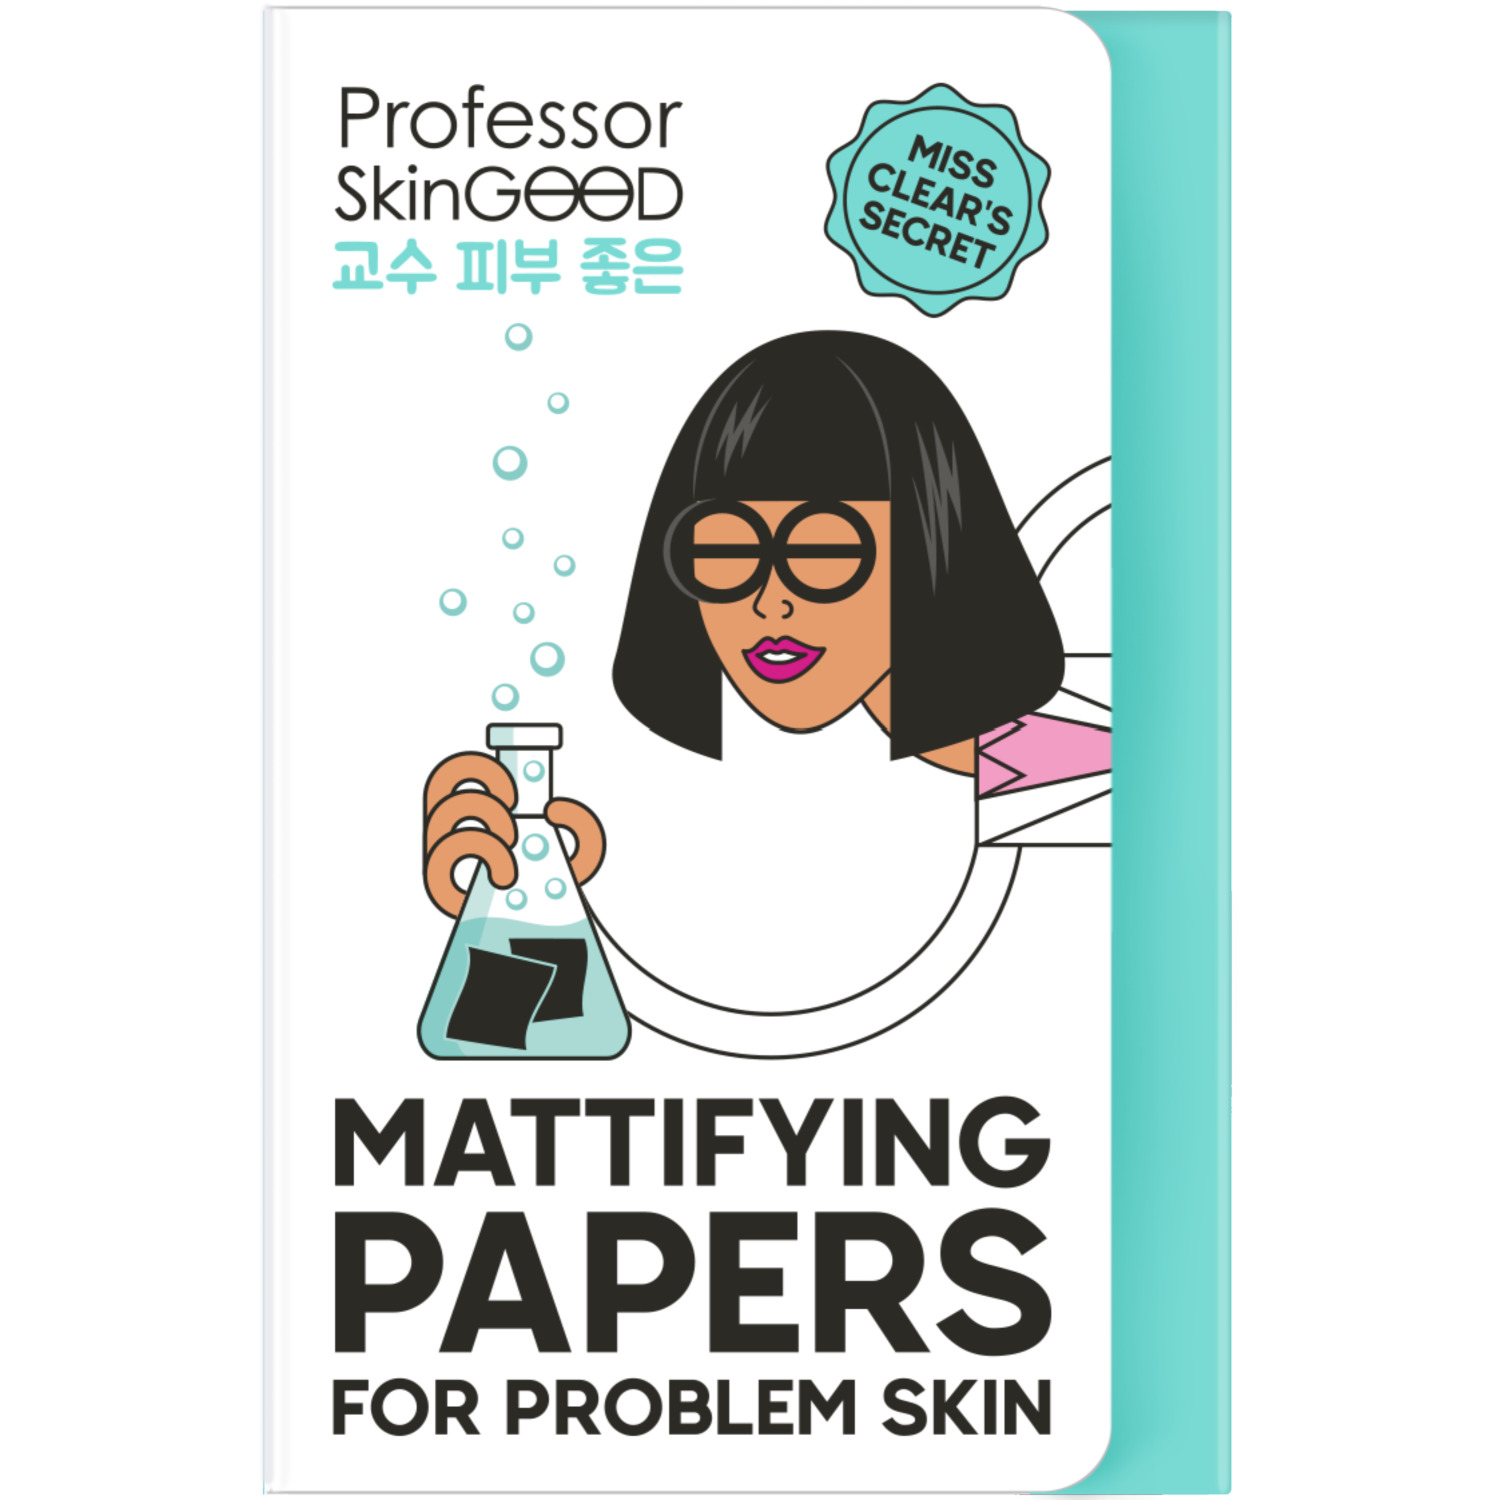 Салфетки Professor SkinGood Mattifying Papers матирующие для проблемной кожи 50 шт матирующие салфетки для лица like a girlboss 50 шт